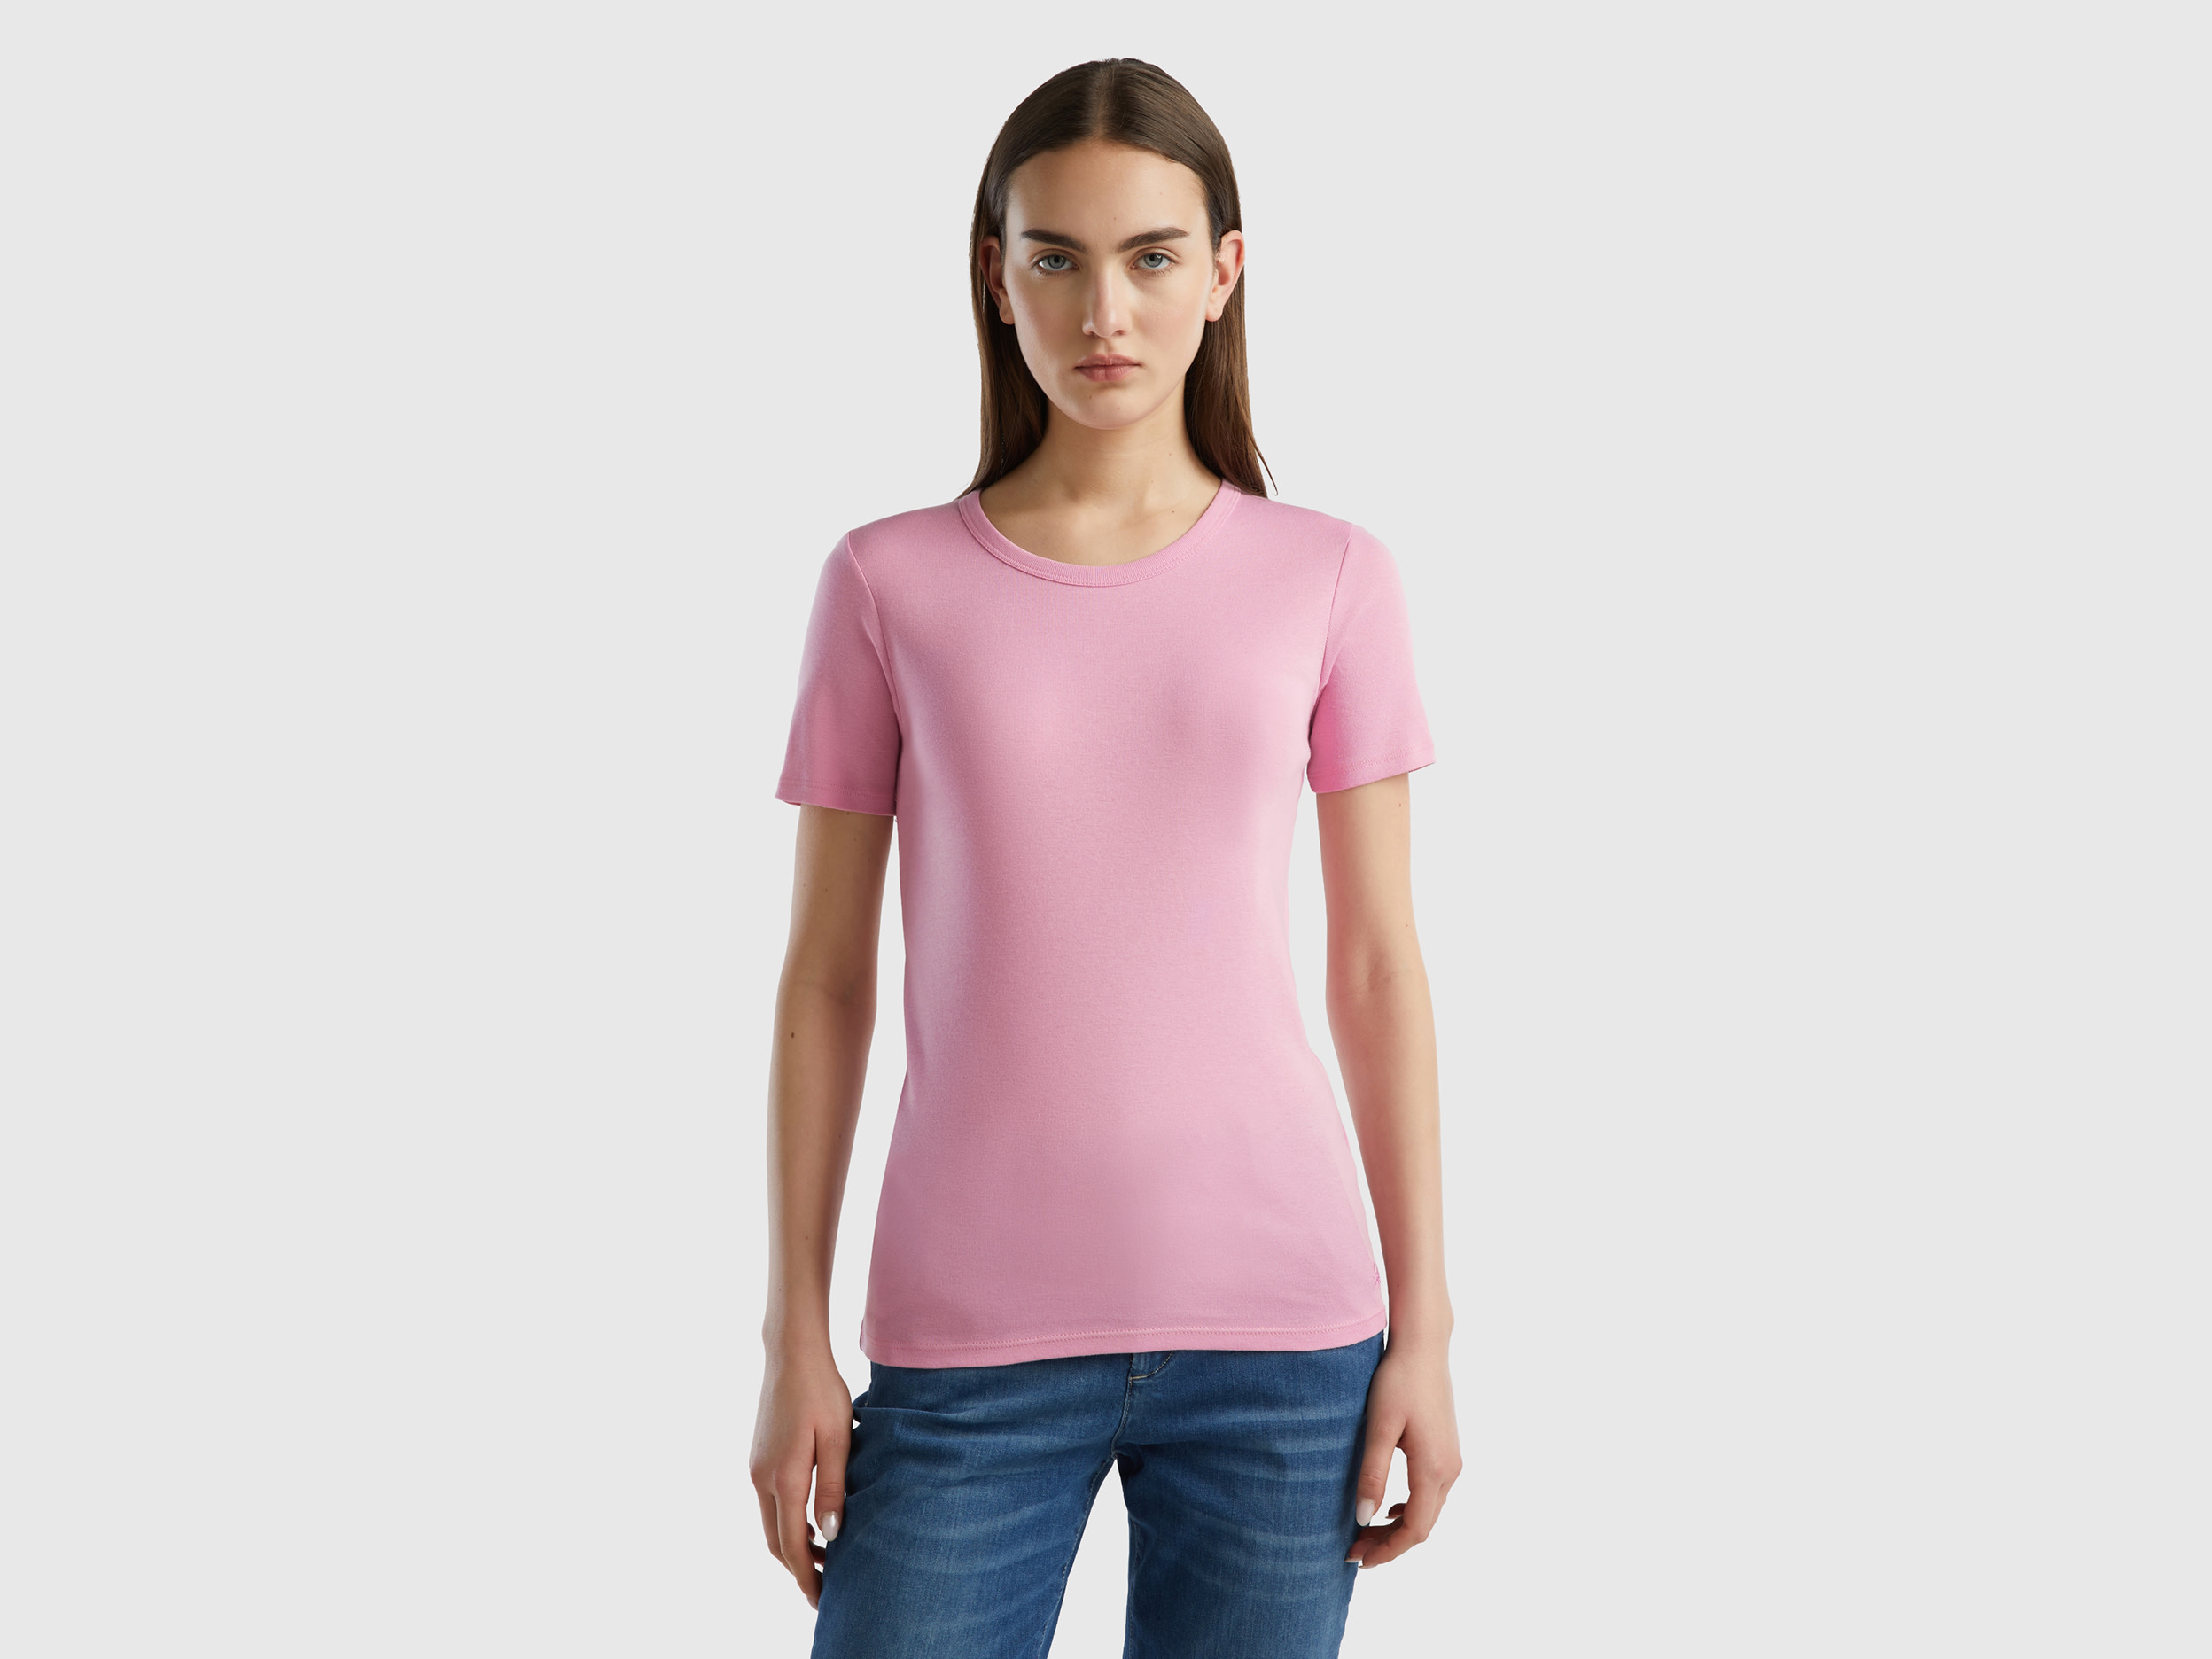 Benetton, Long Fiber Cotton T-shirt, size XL, Pastel Pink, Women